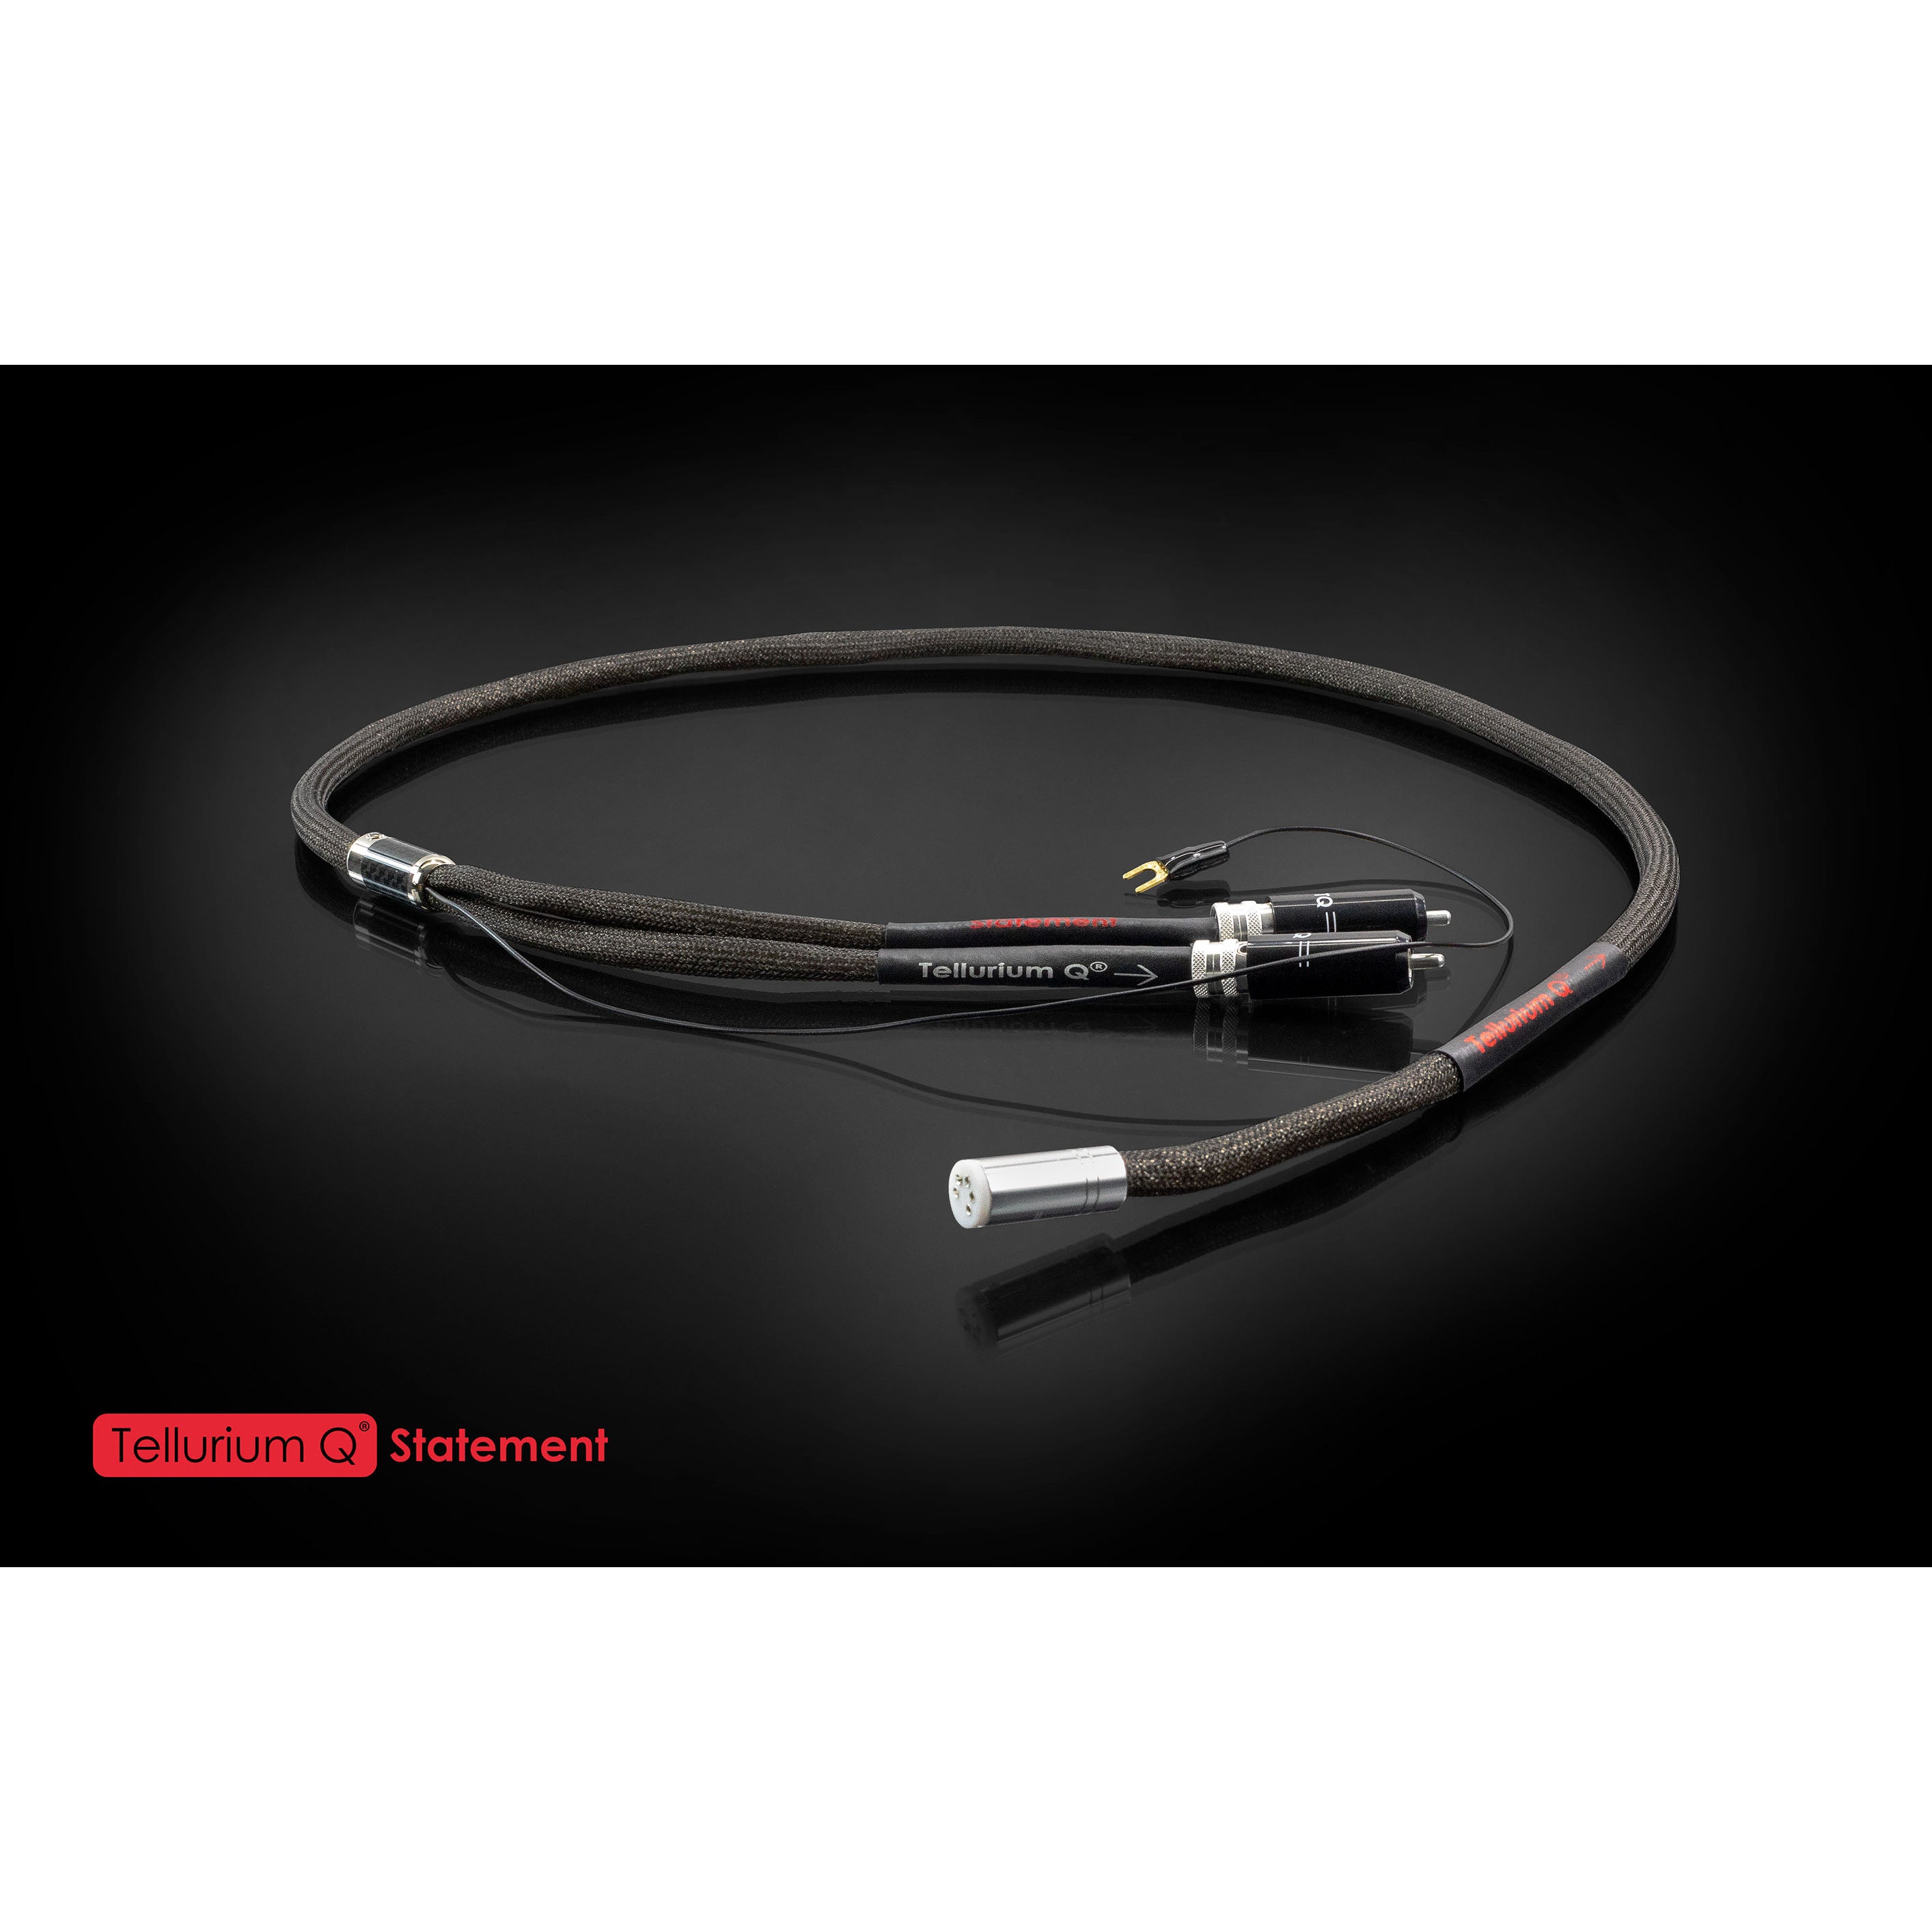 Tellurium Q Statement Tone Arm DIN-RCA / DIN-XLR Cable